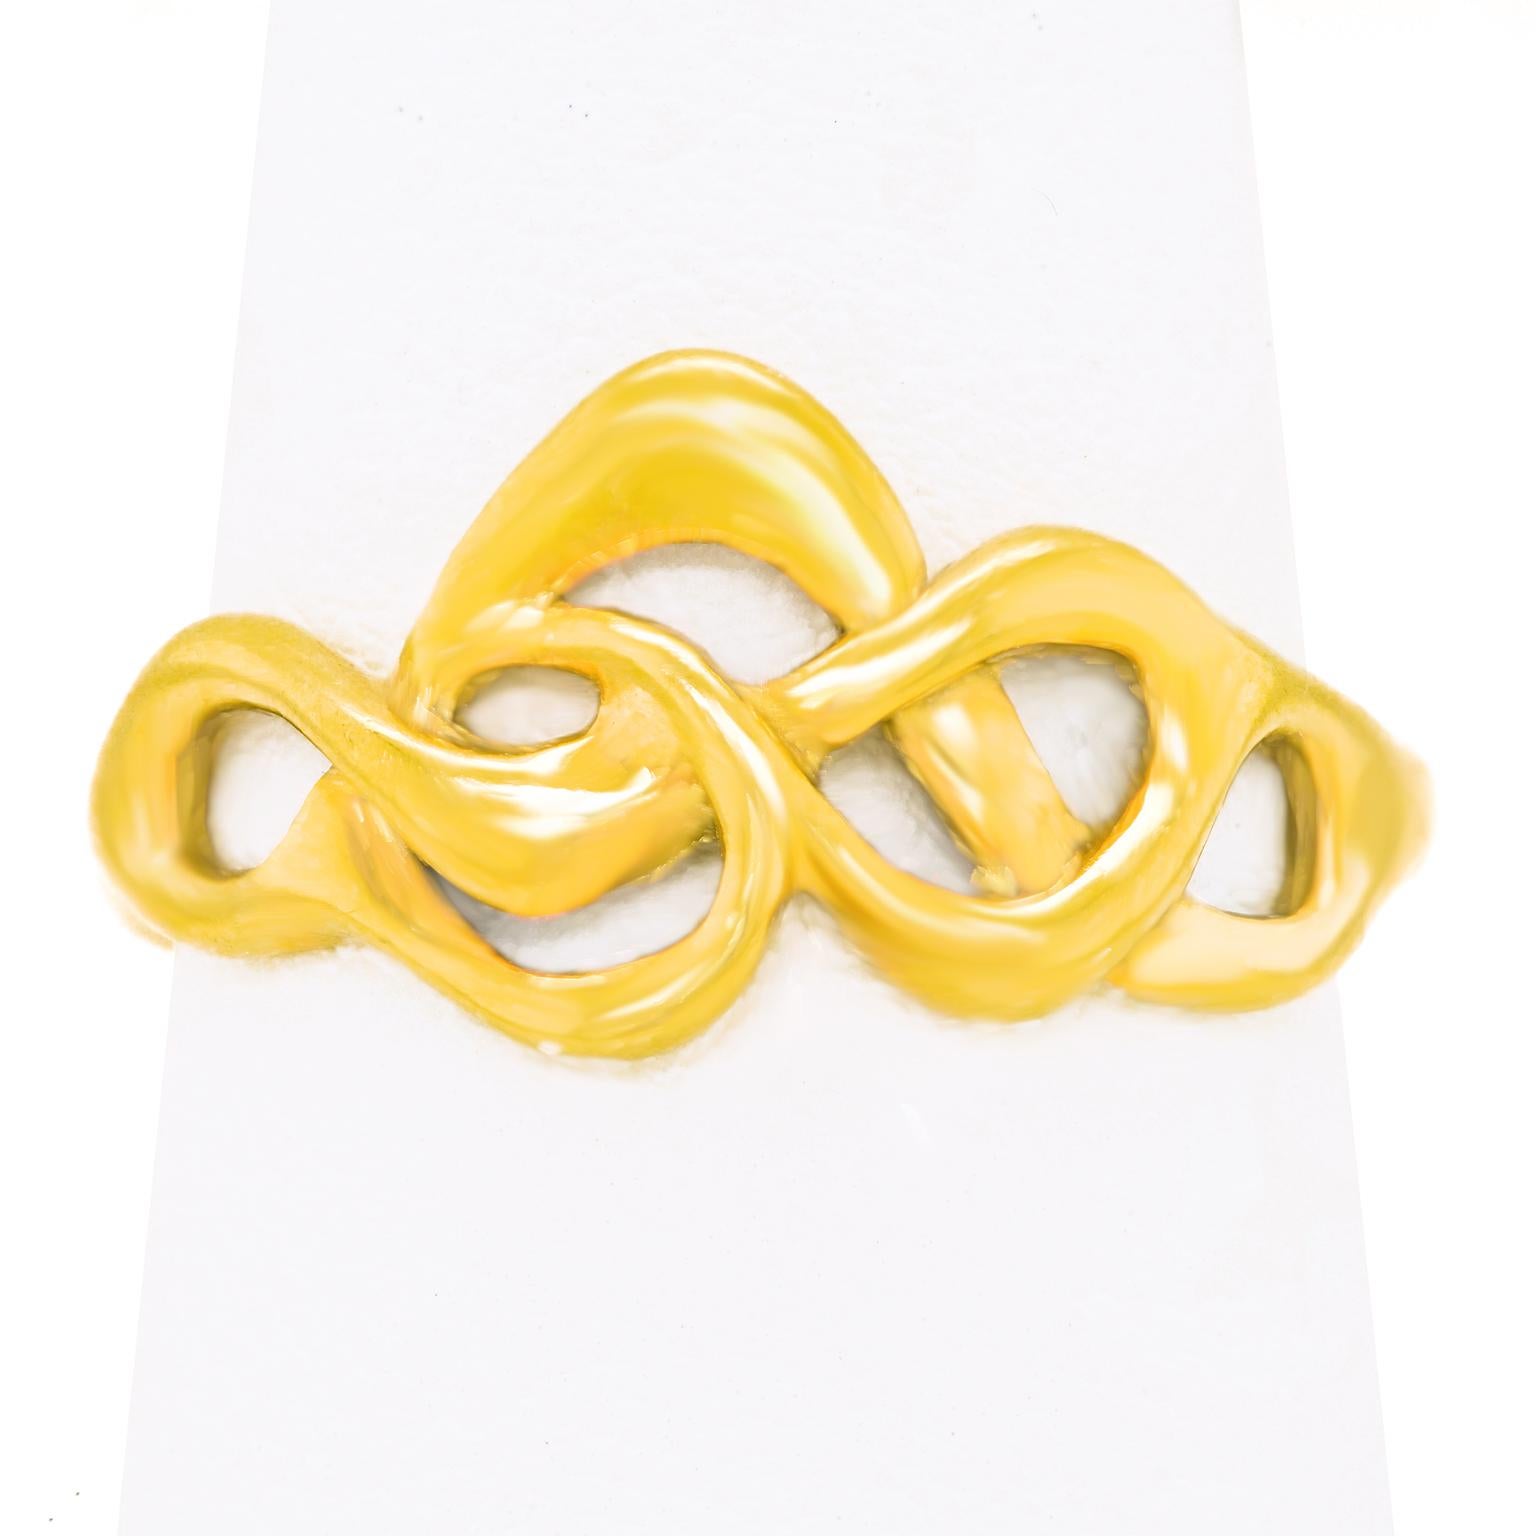 Peter Aylen Gold Knot Ring 2